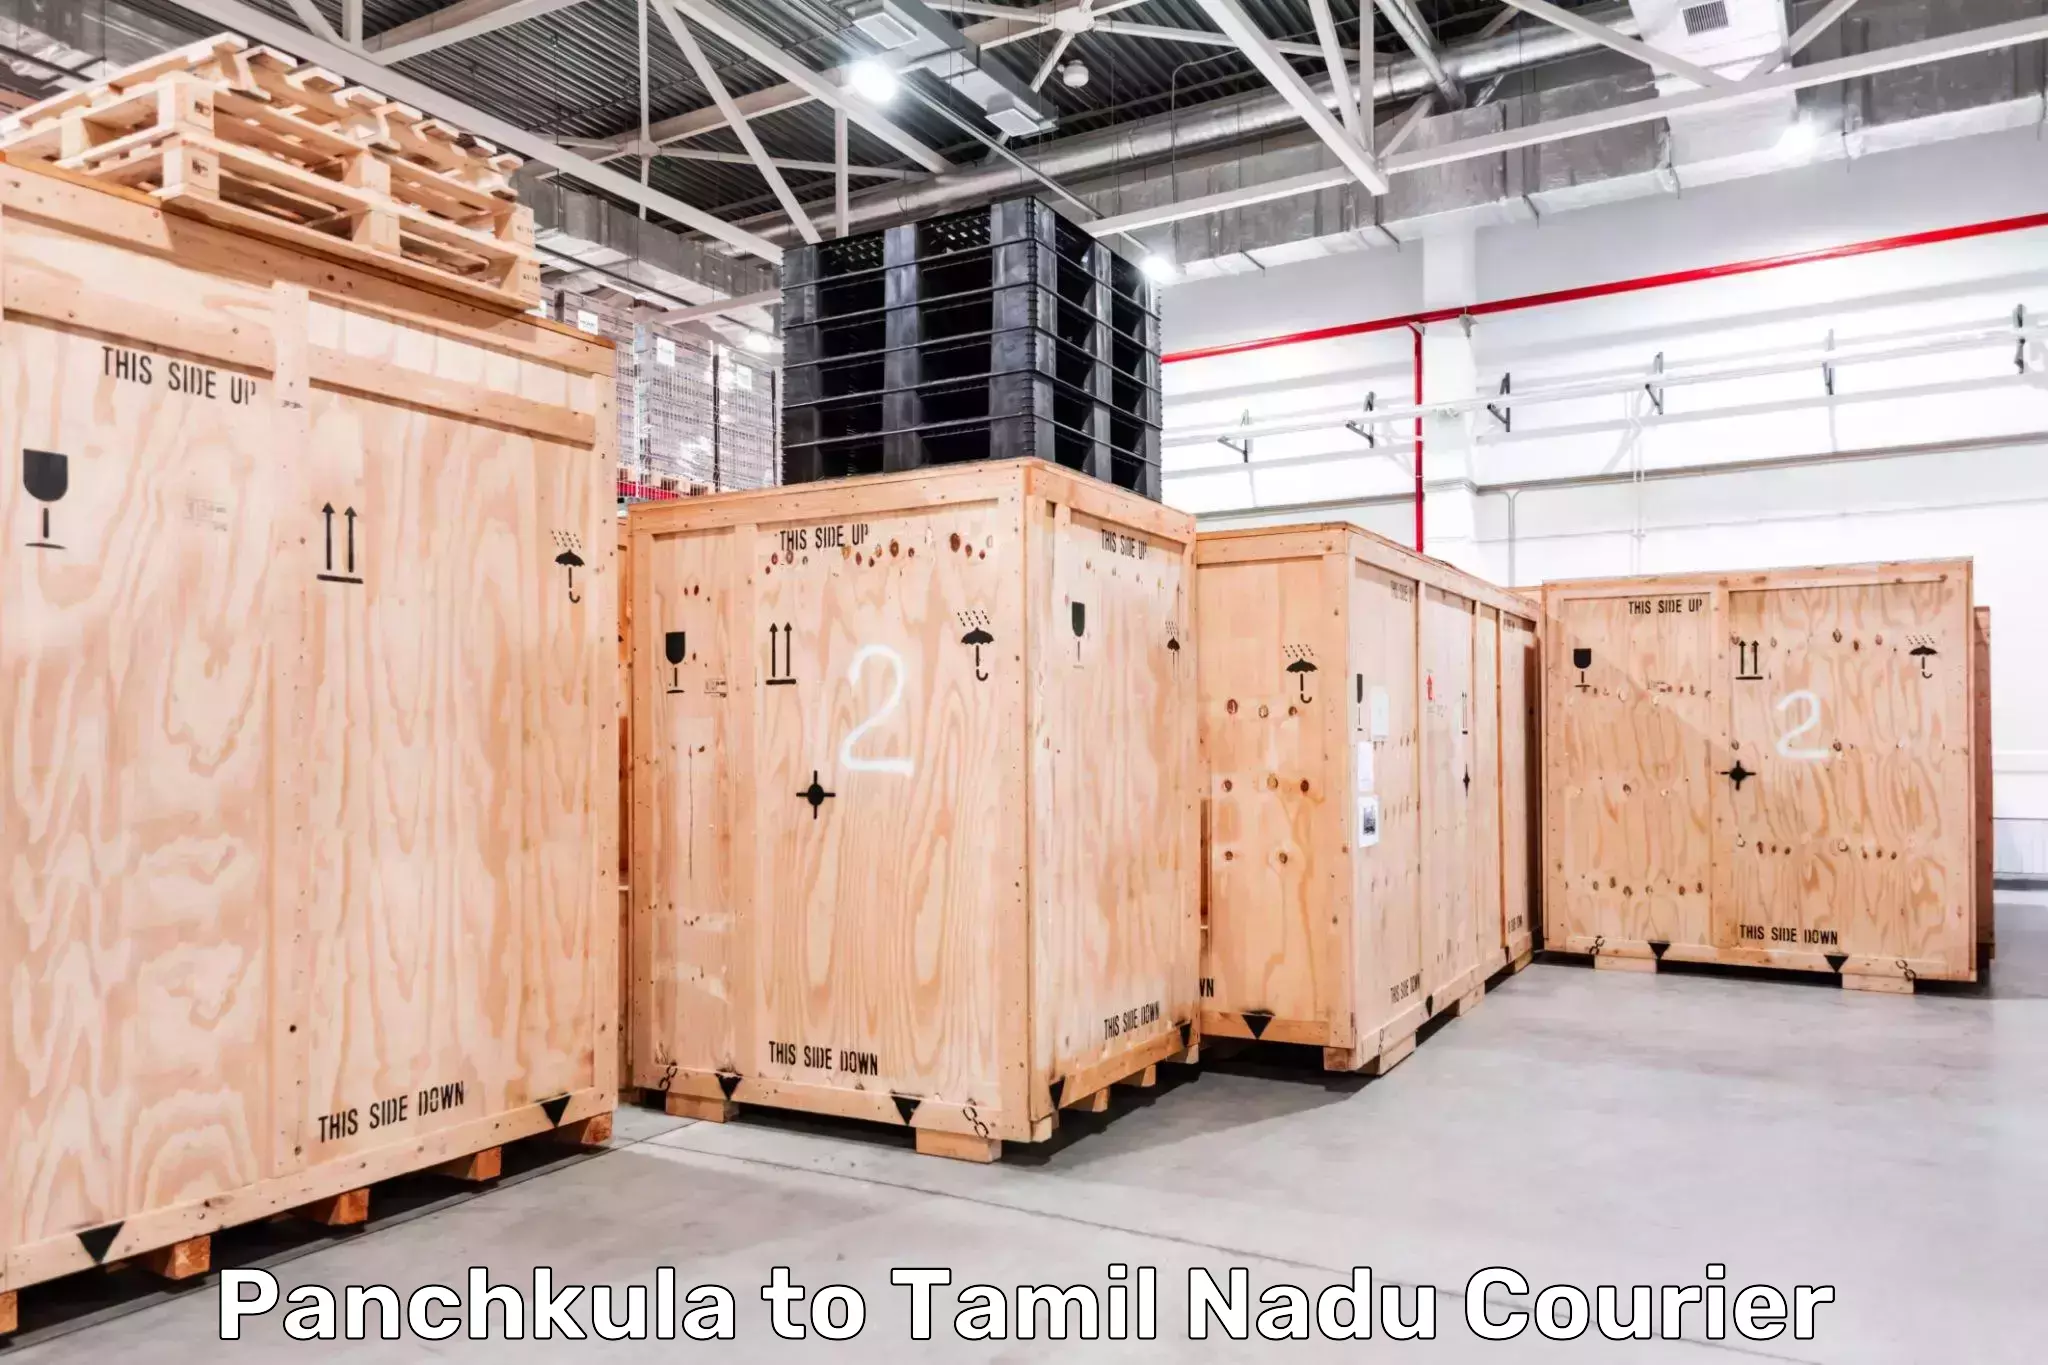 Global courier networks Panchkula to Tamil Nadu